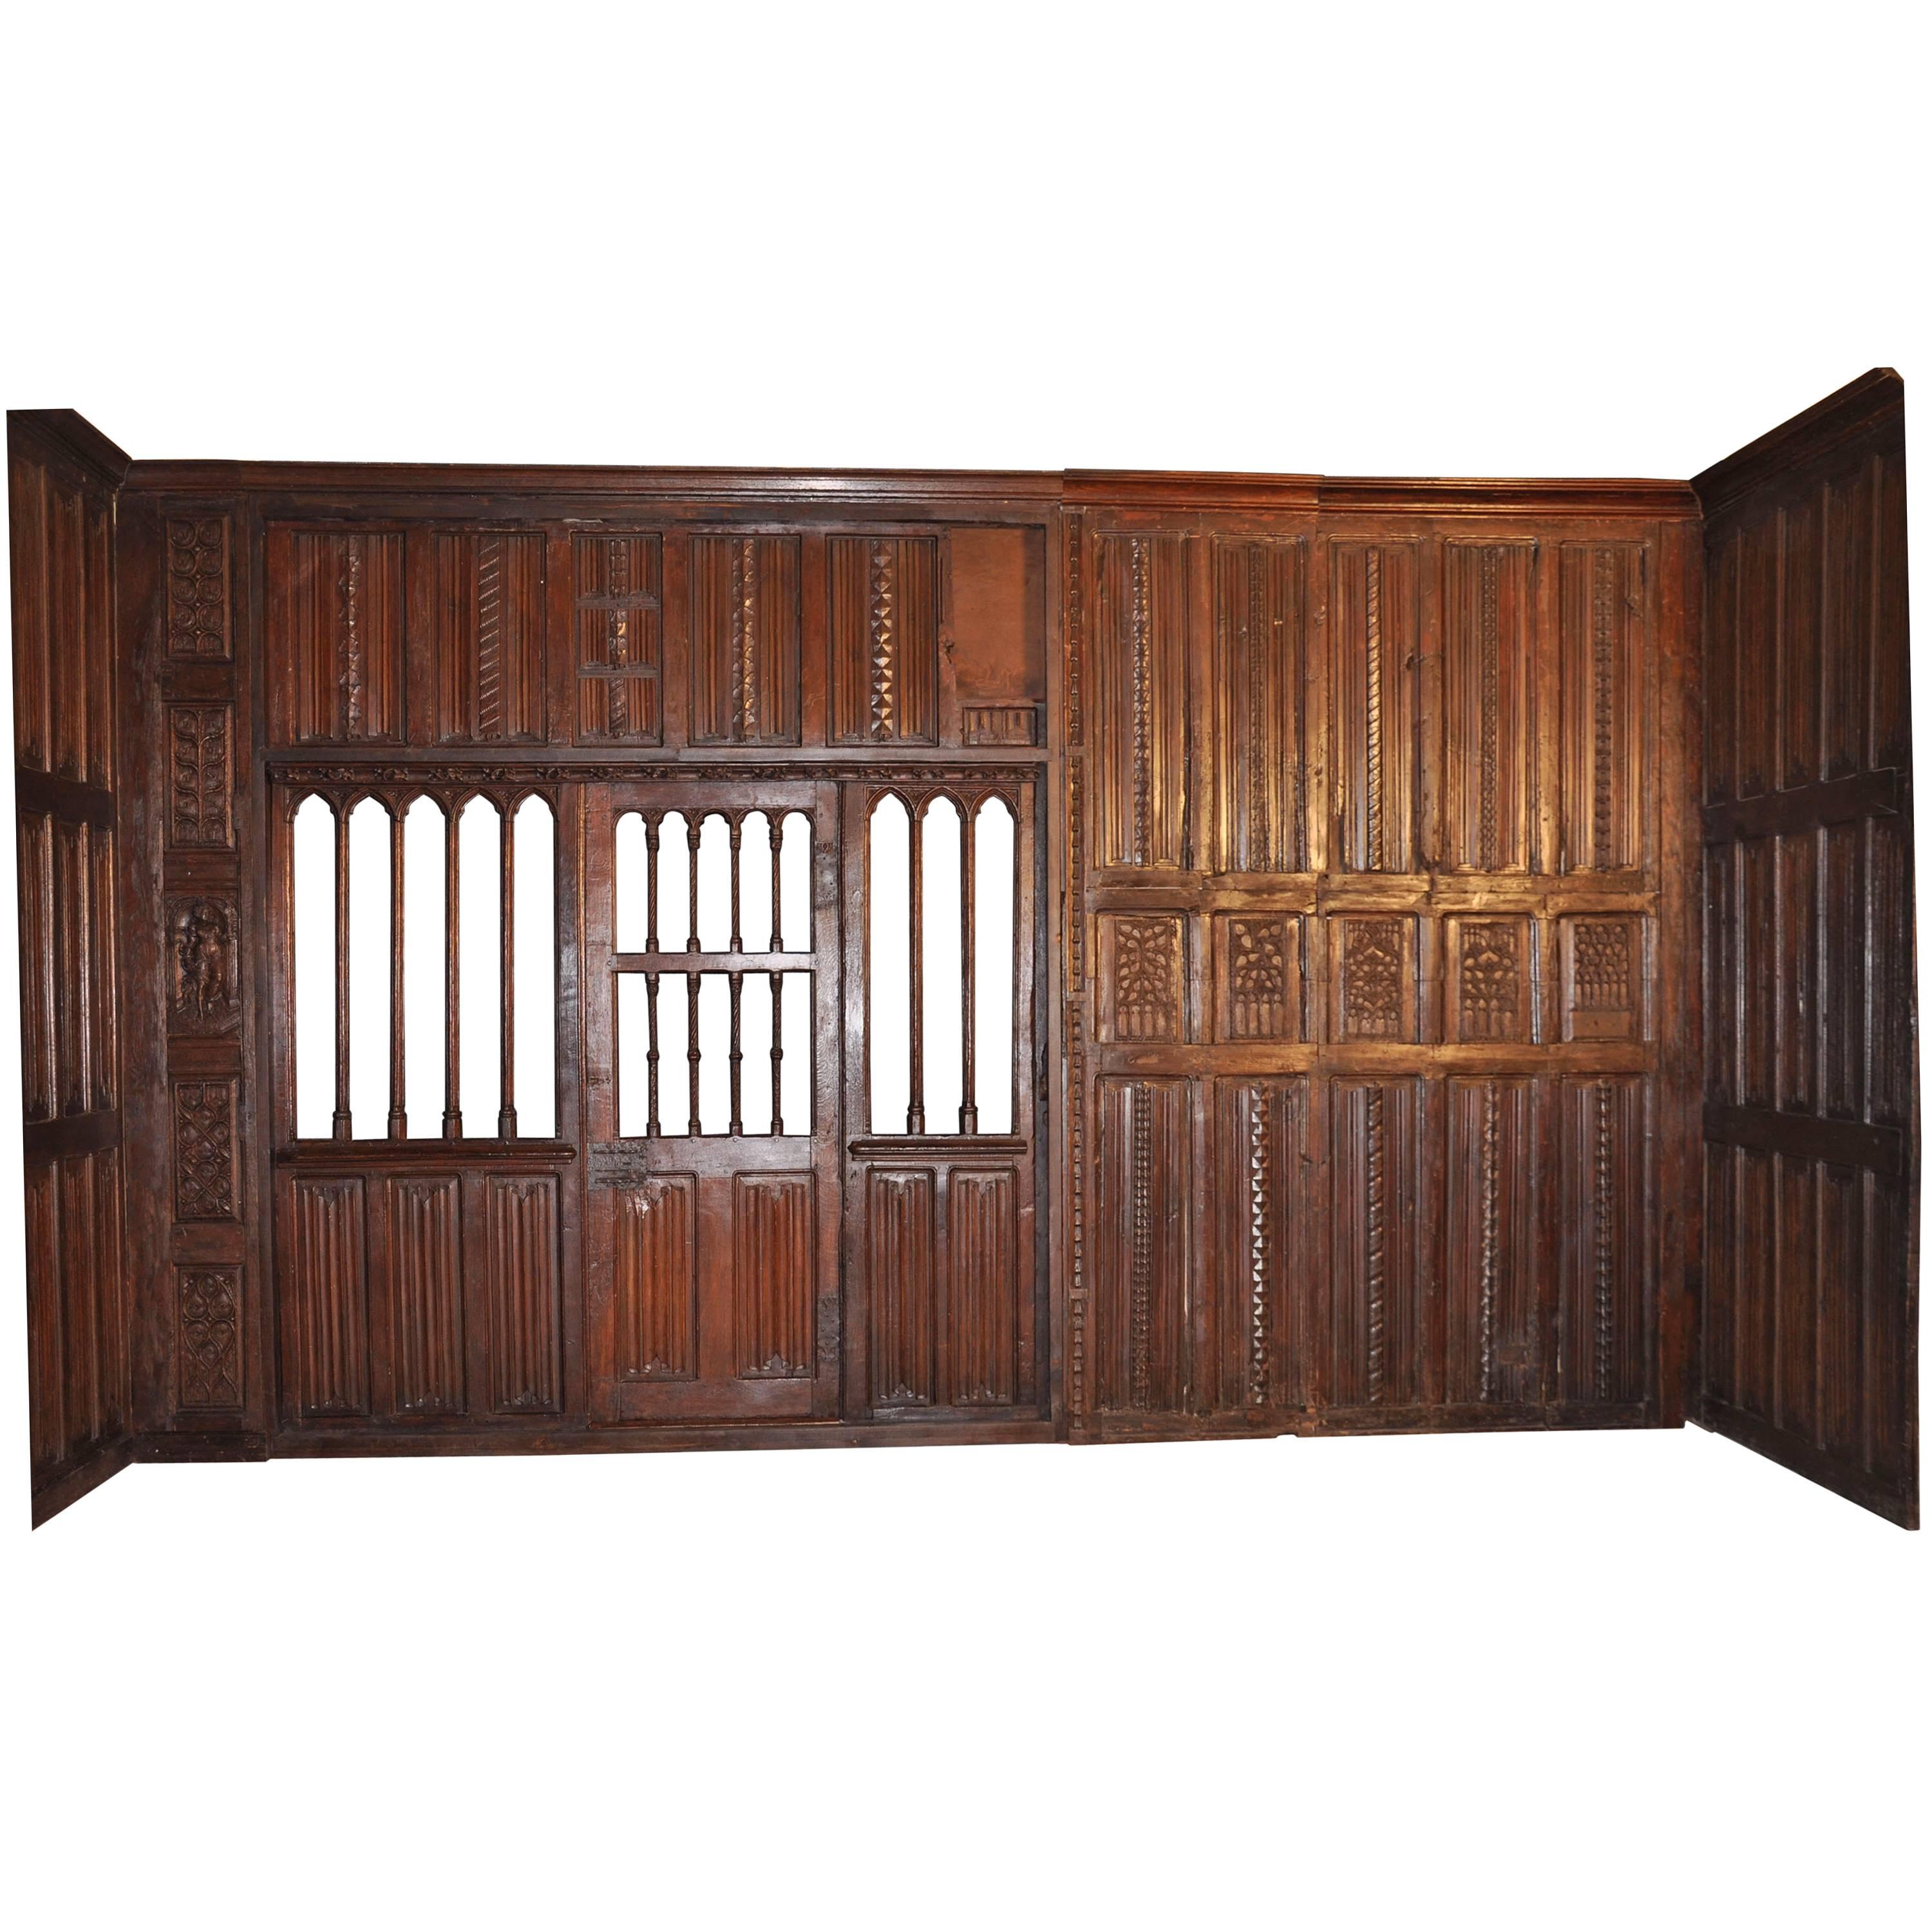 English Renaissance Carved Oak Paneled Room For Sale